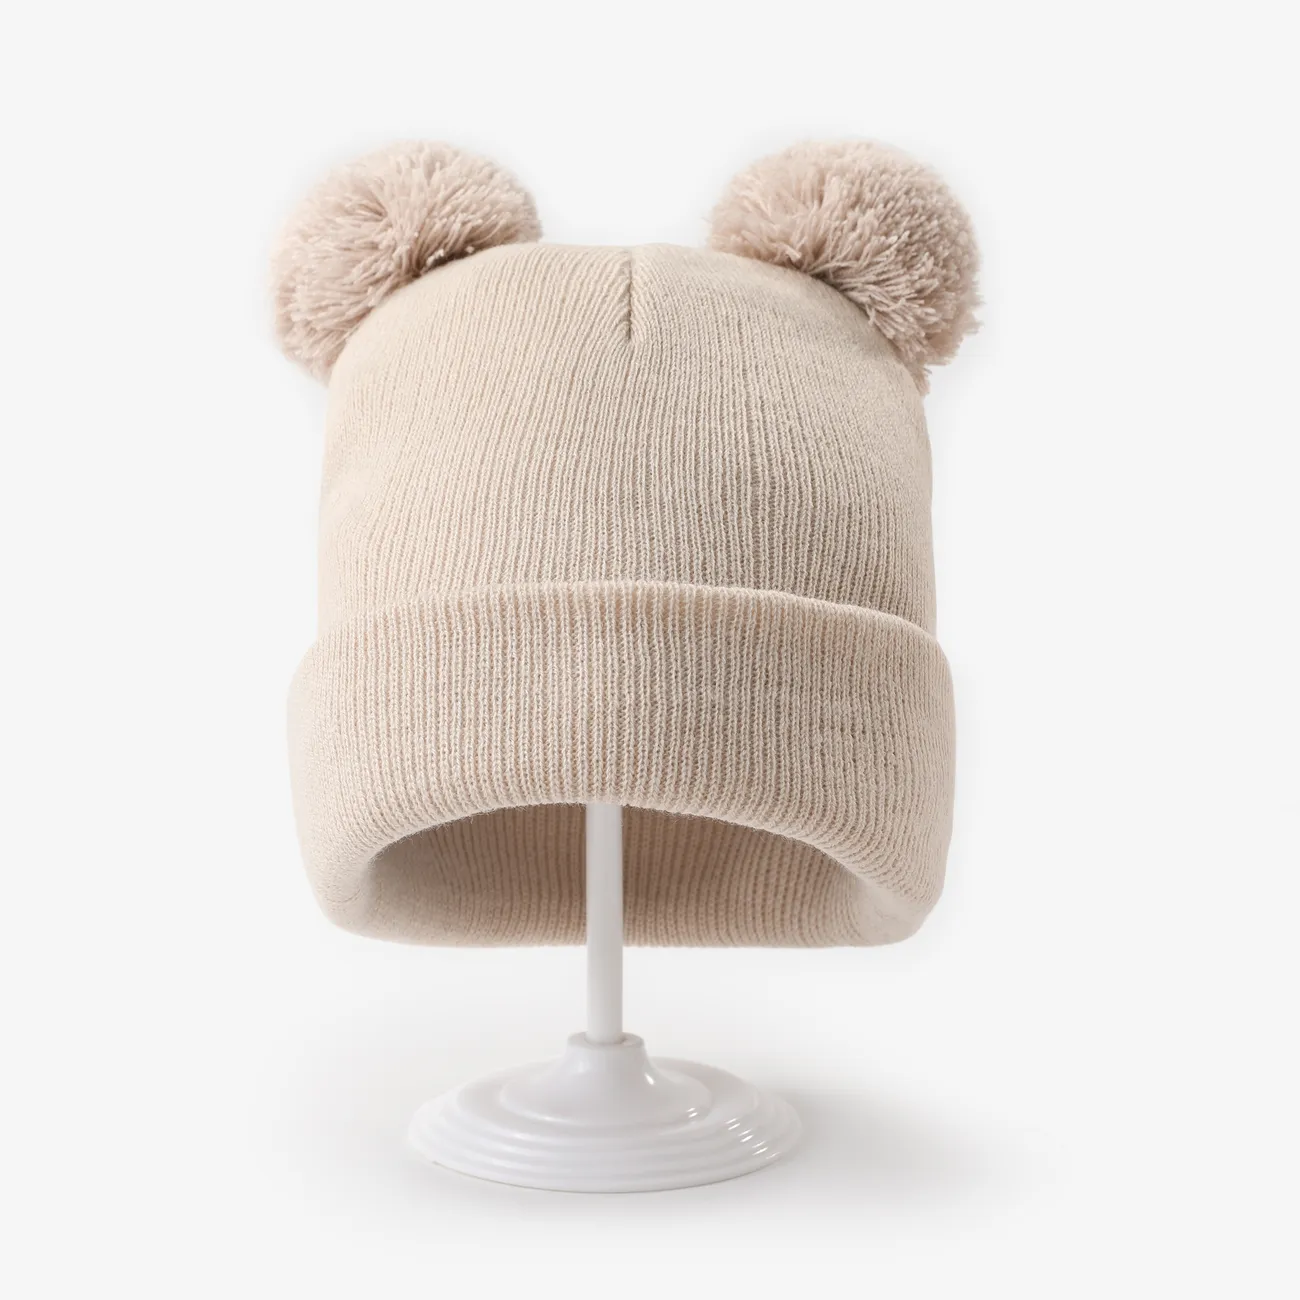 Baby/toddler knitted hat warm fur ball hat LightKhaki big image 1